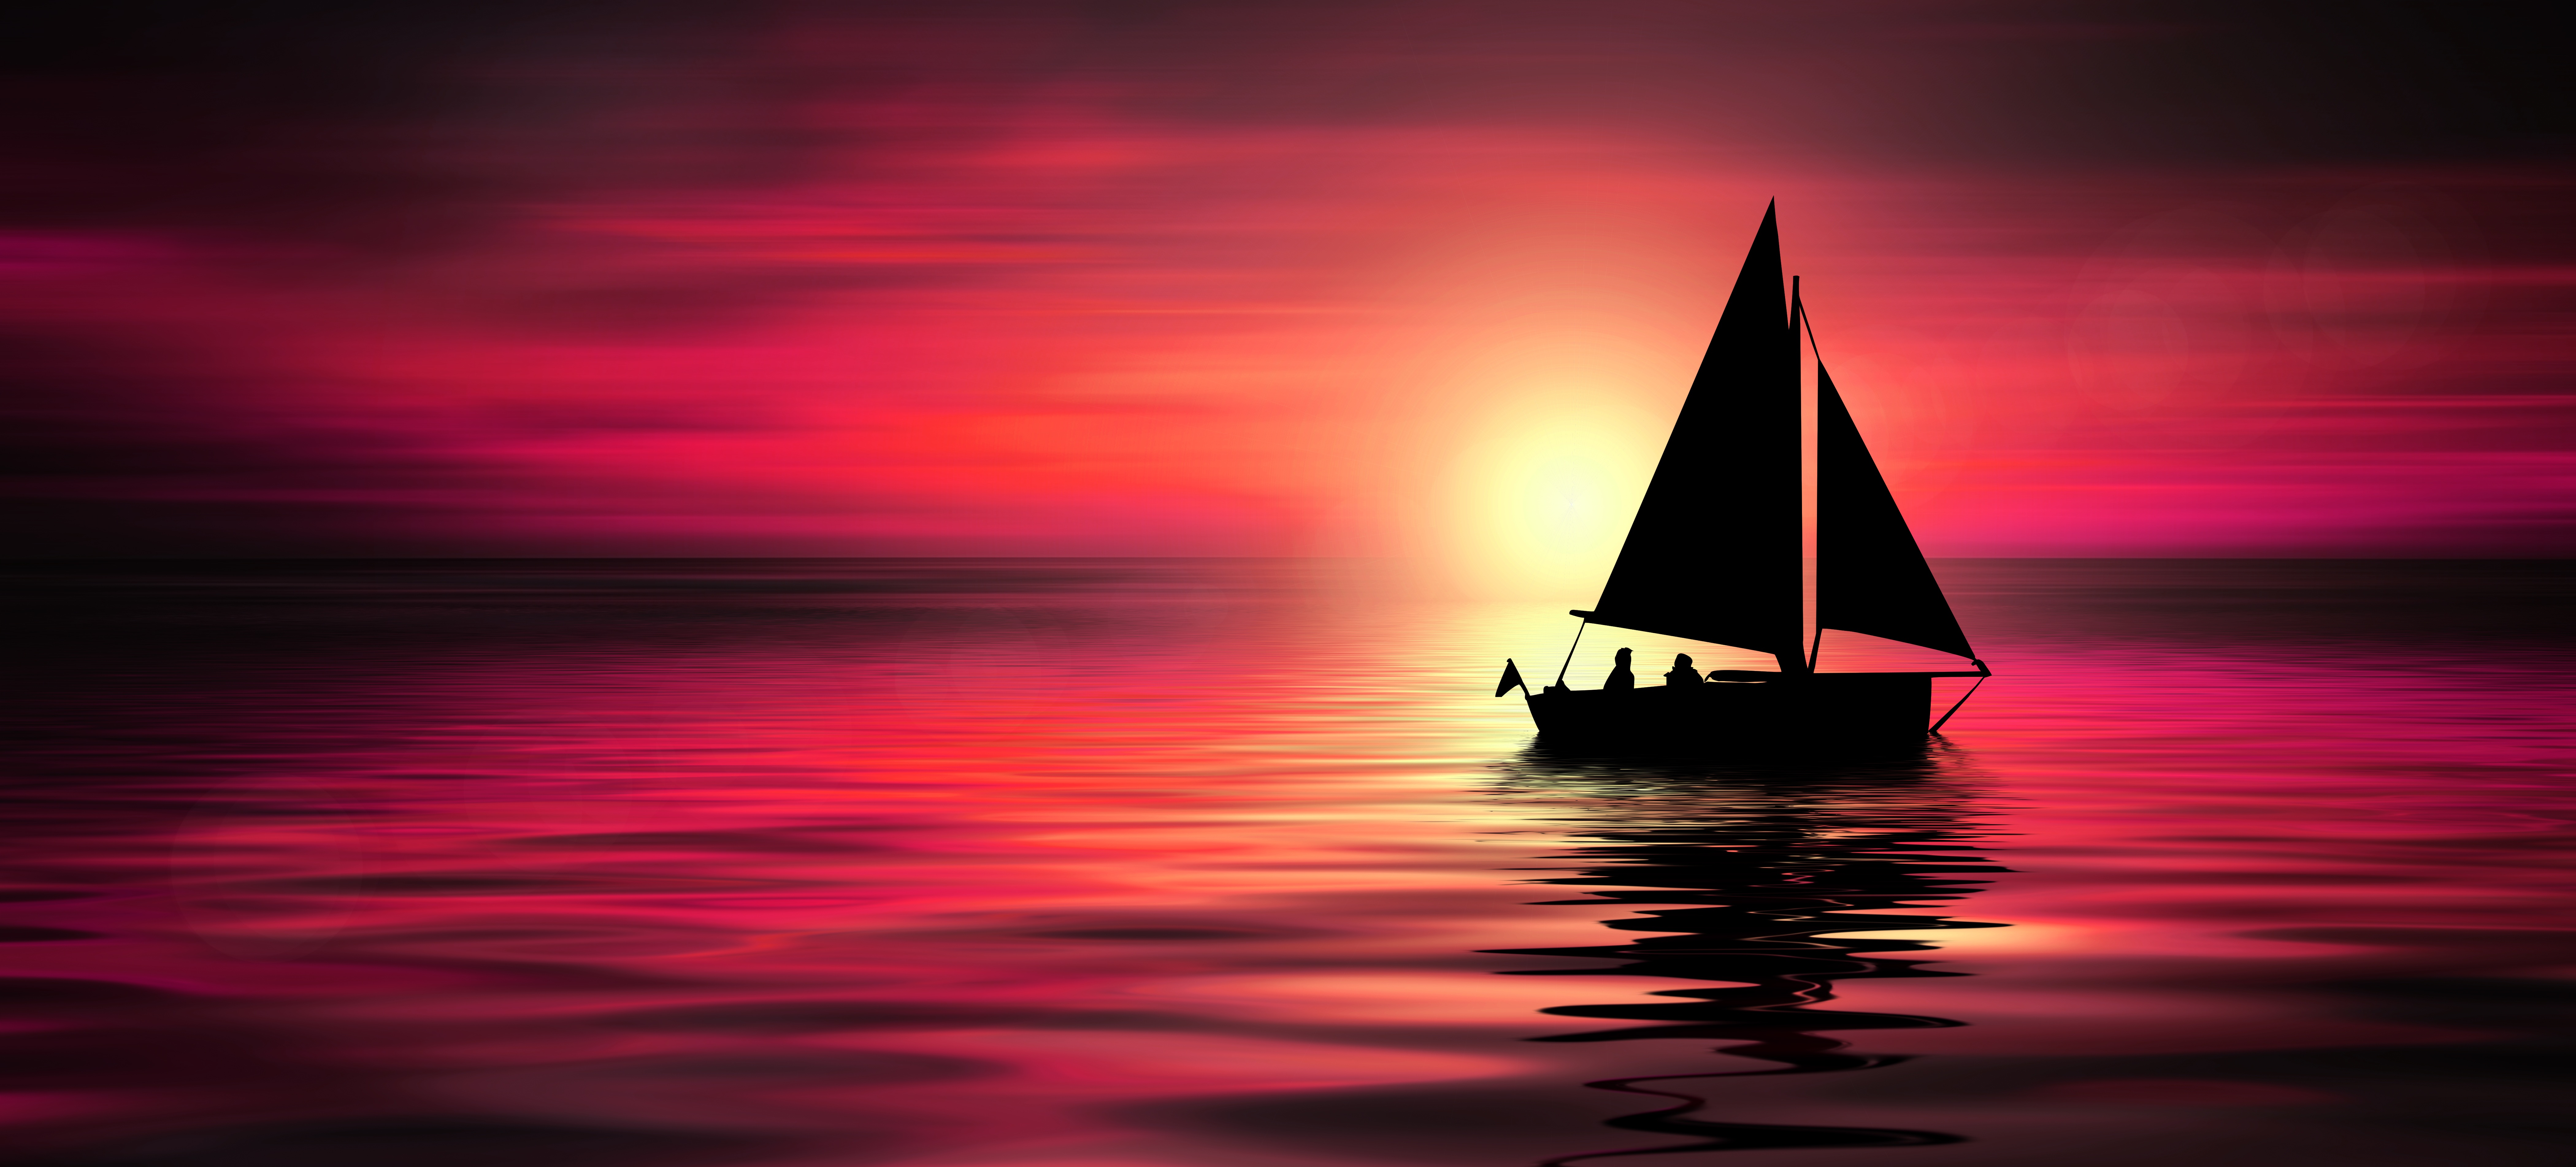 sail, silhouettes, sea, night, horizon, dark